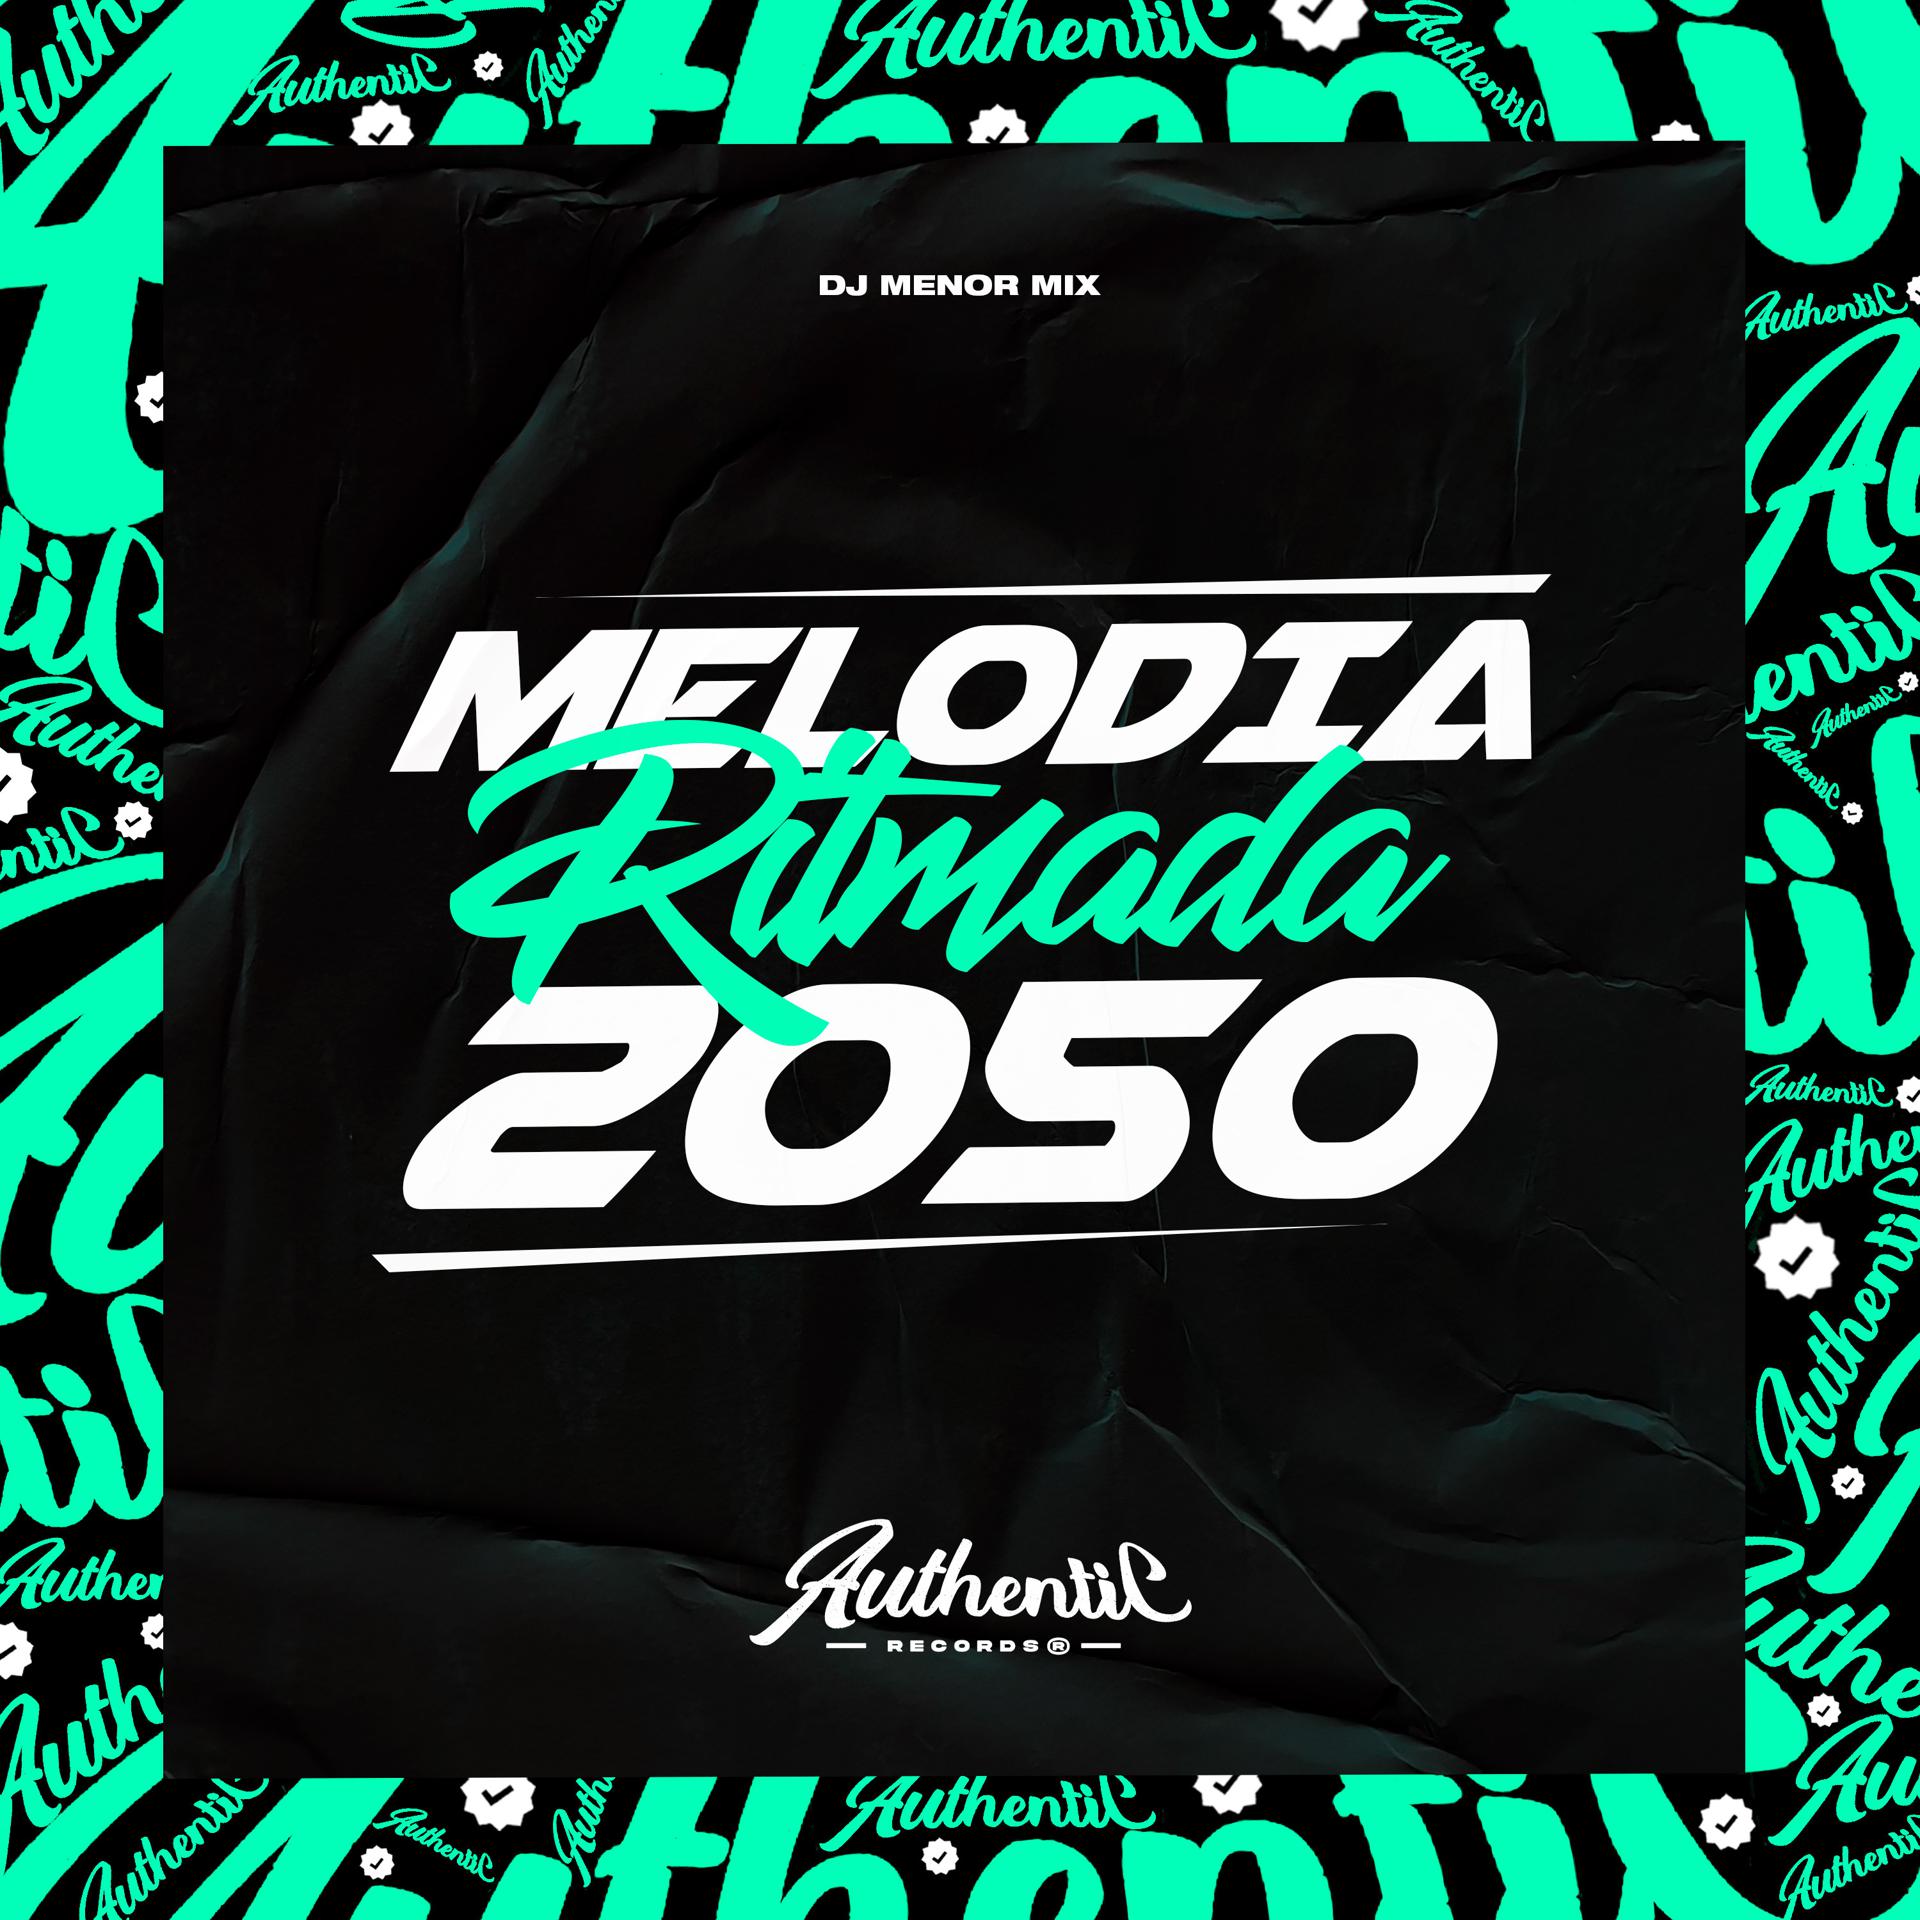 Постер альбома Melodia Ritmada 2050